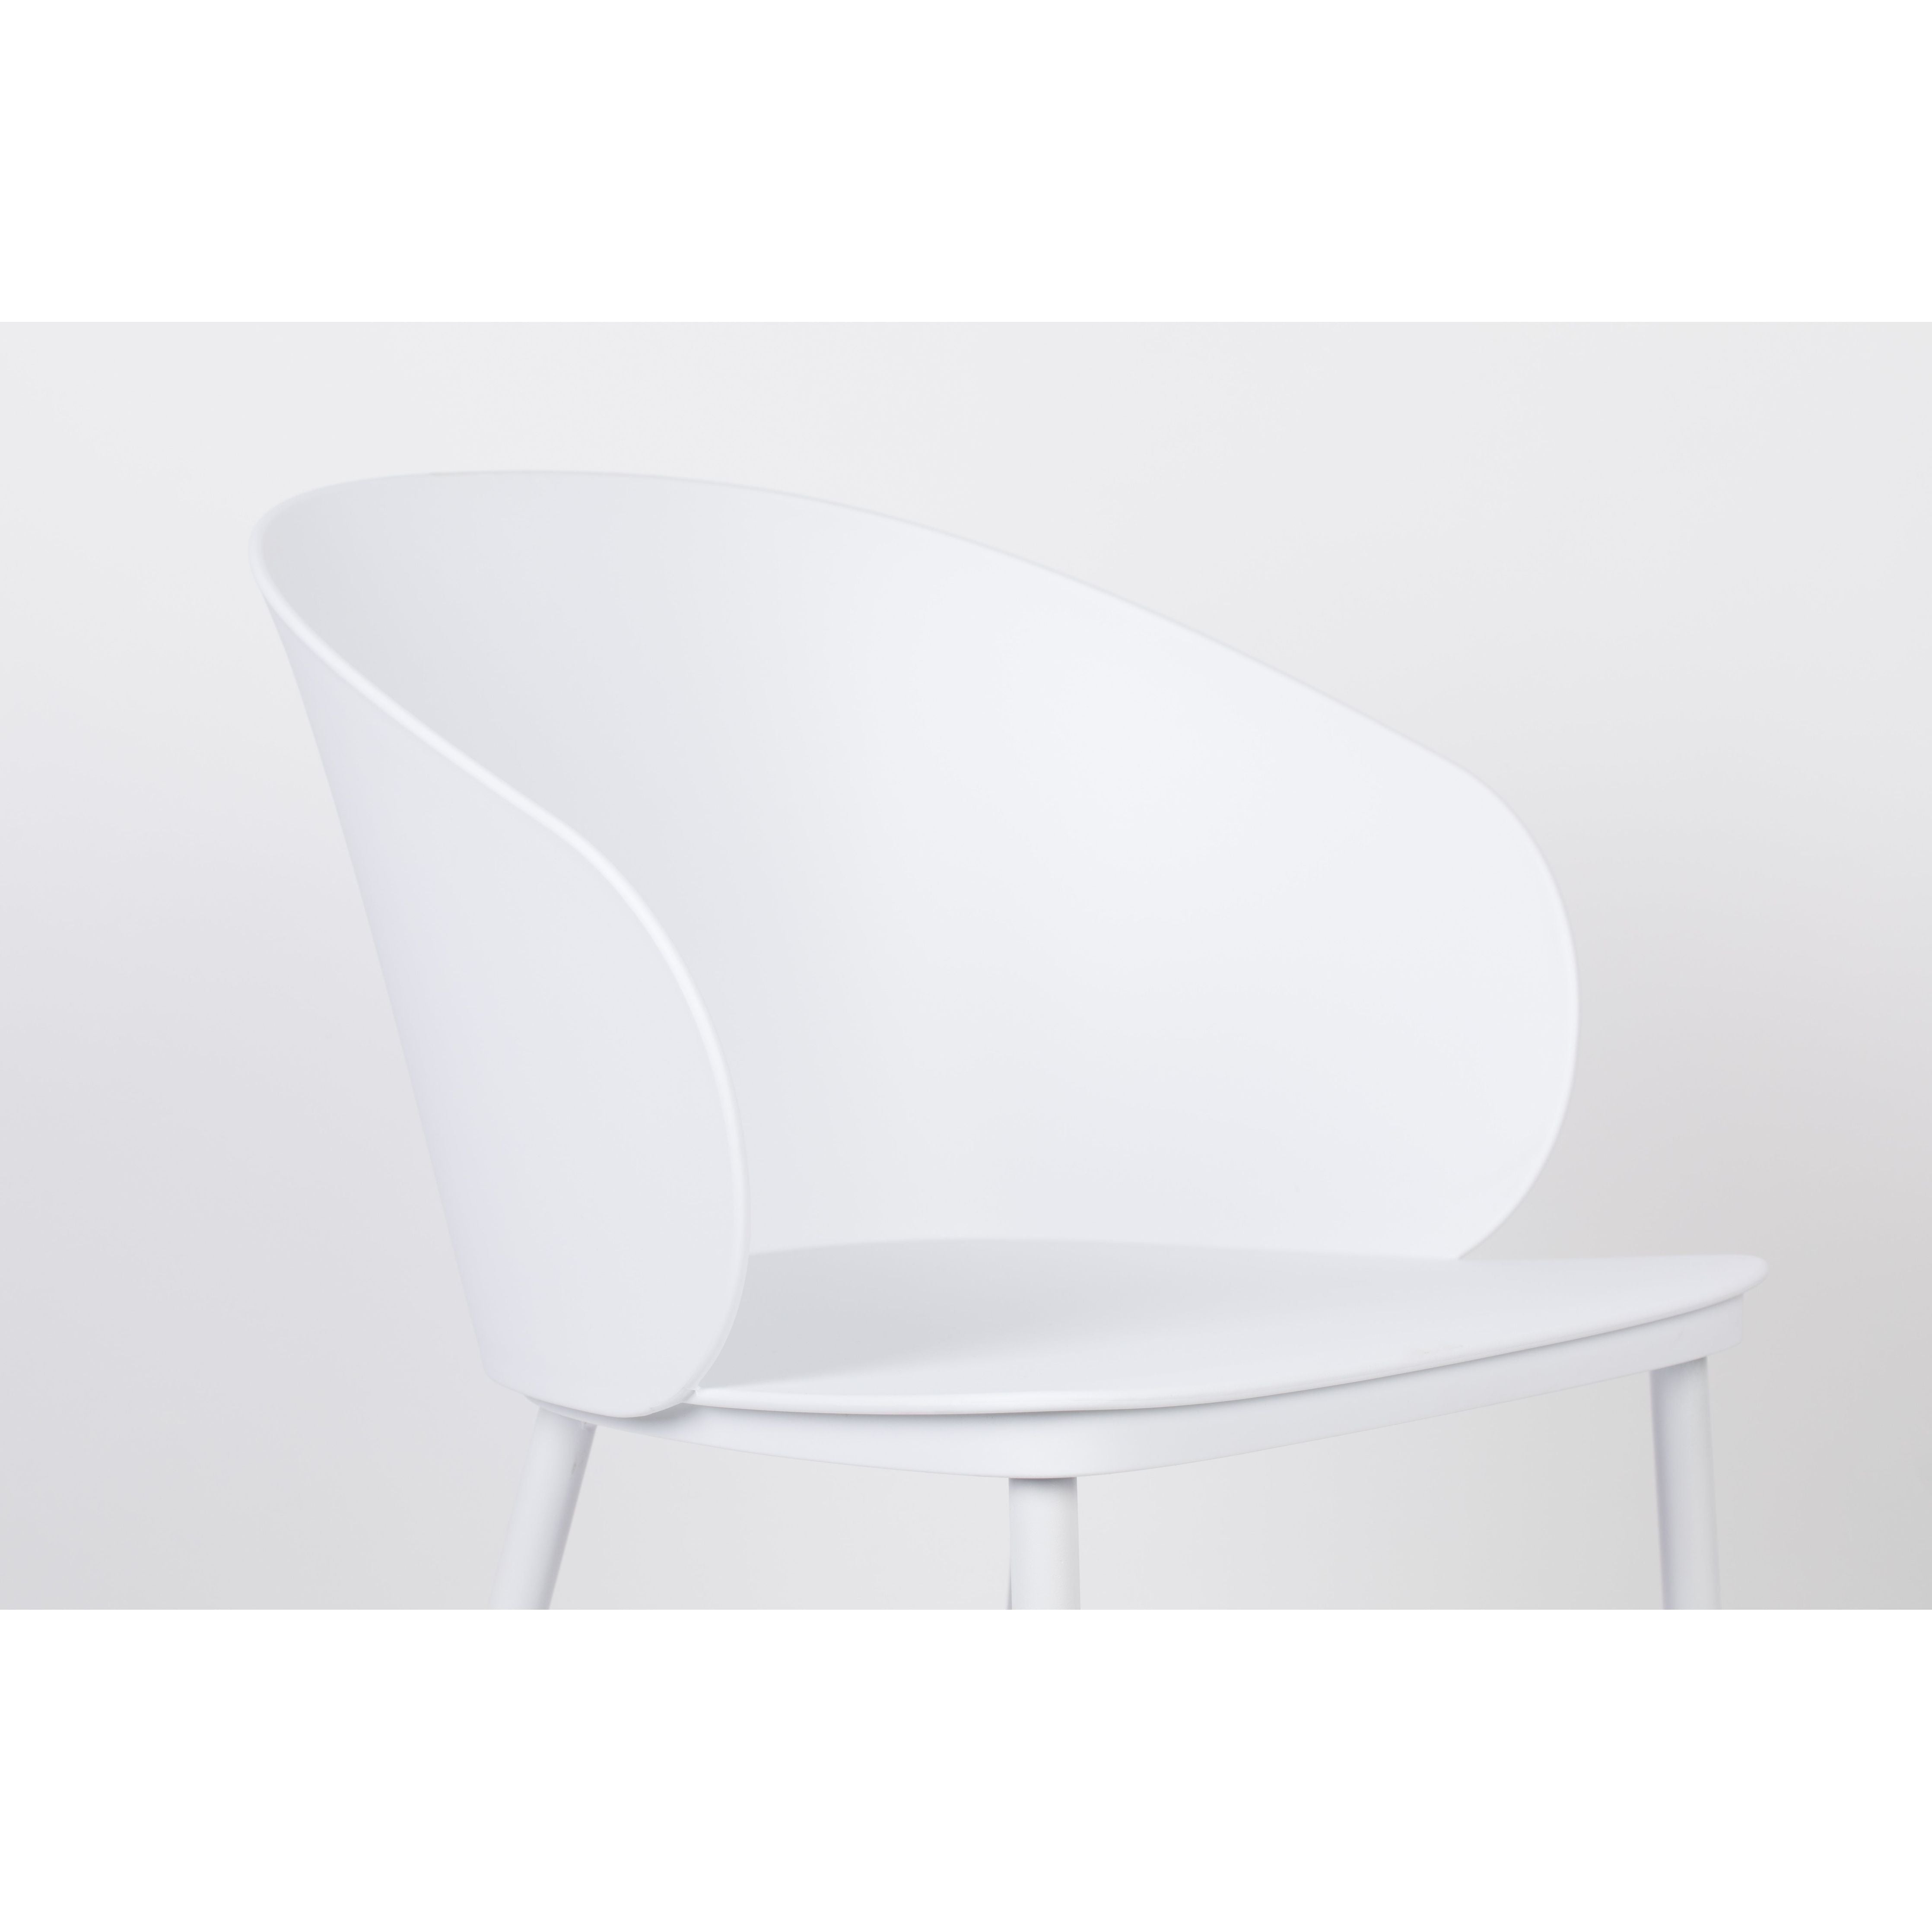 Chair gigi all white | 2 pieces